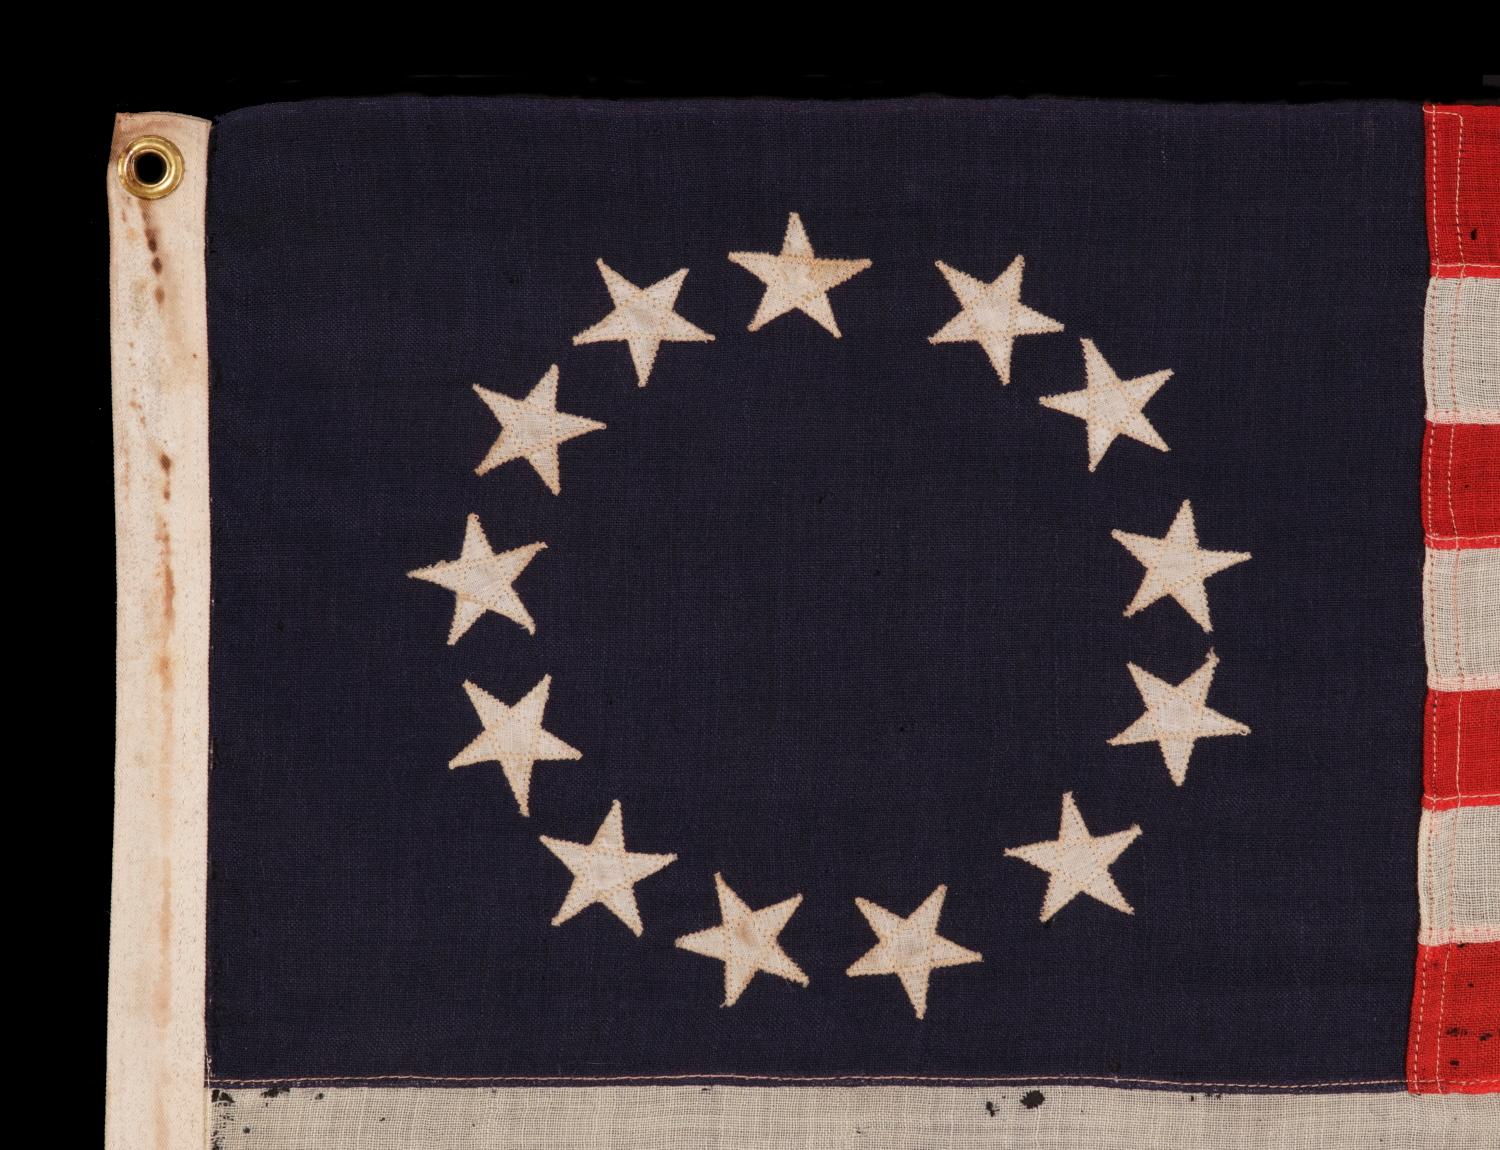 american flag in 1846